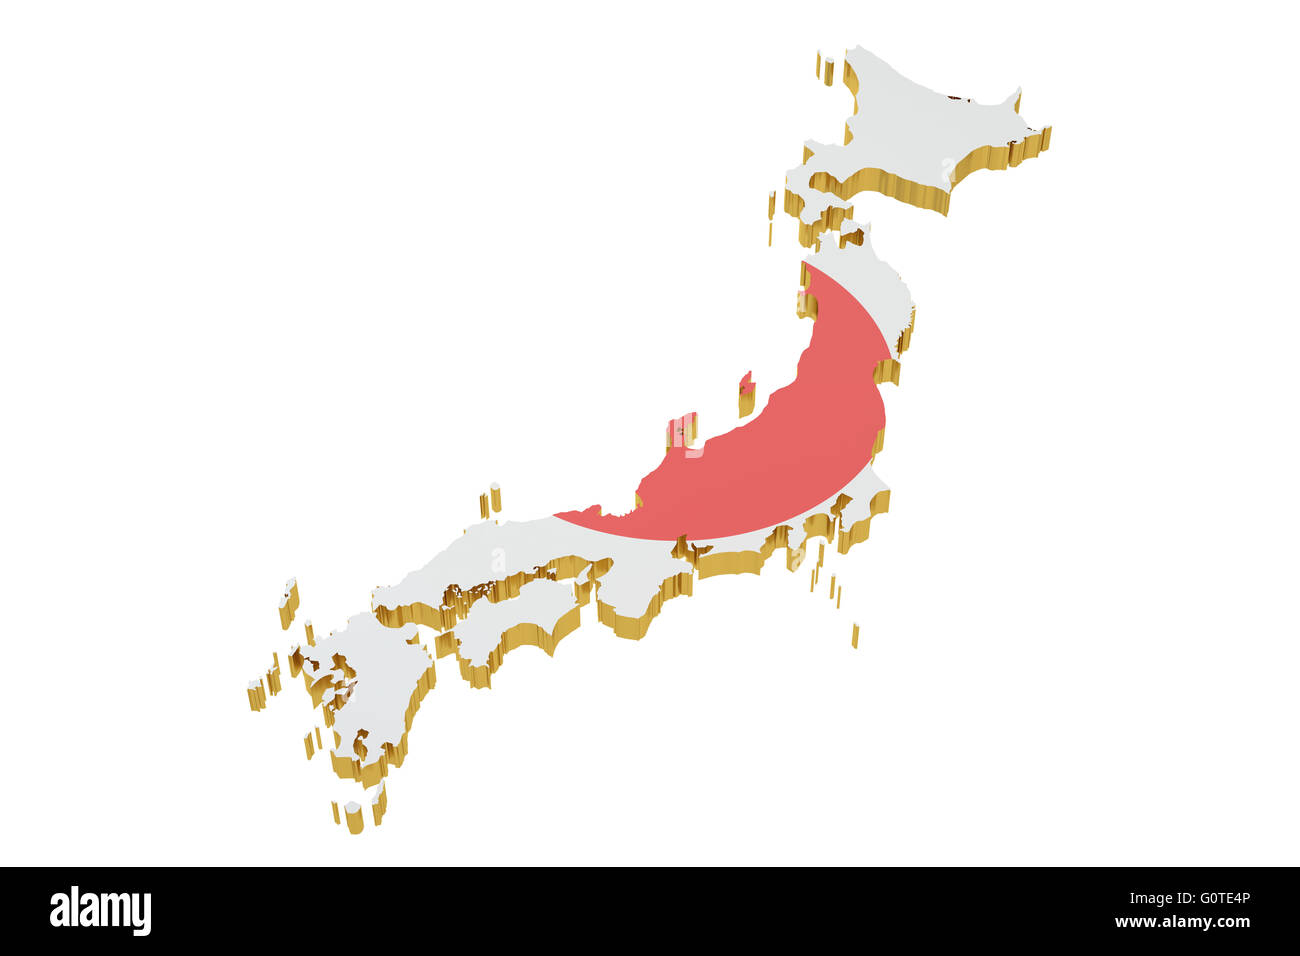 Japan map isolated on white background Stock Photo